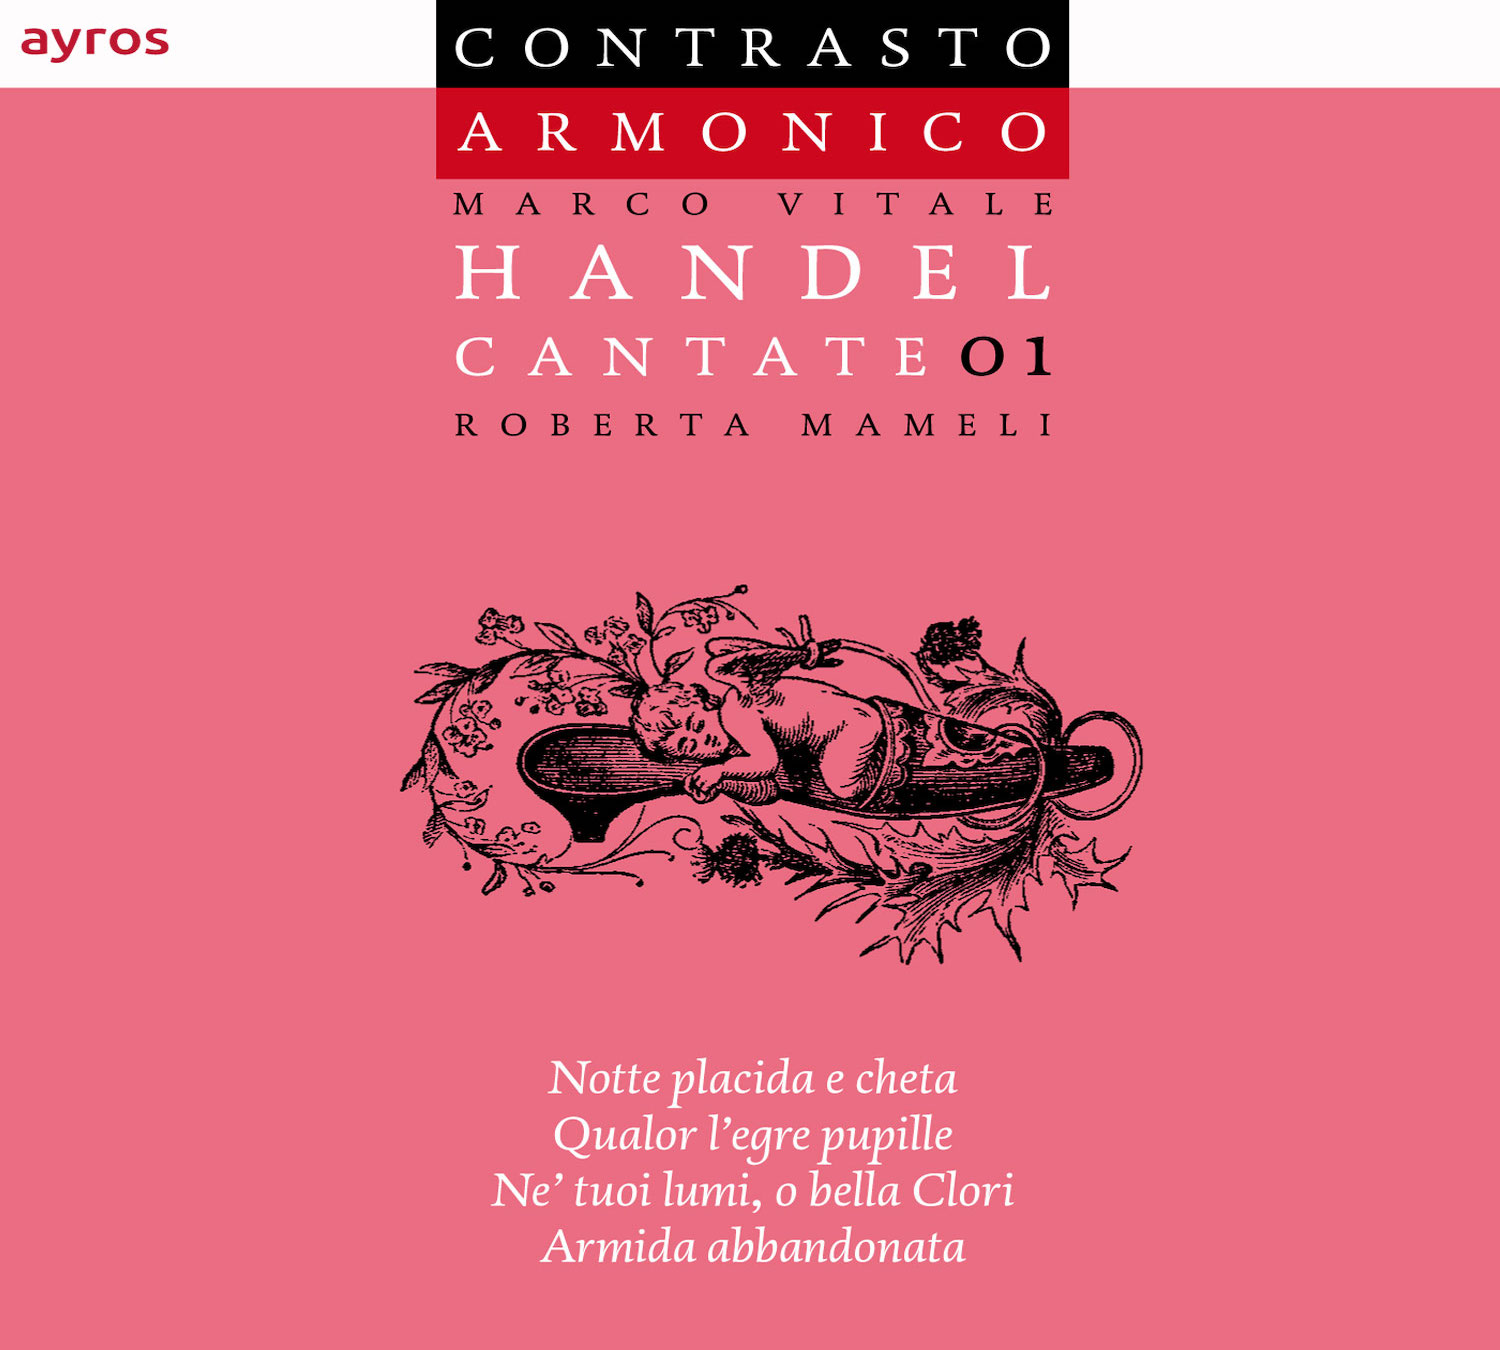 Handel Cantate 01